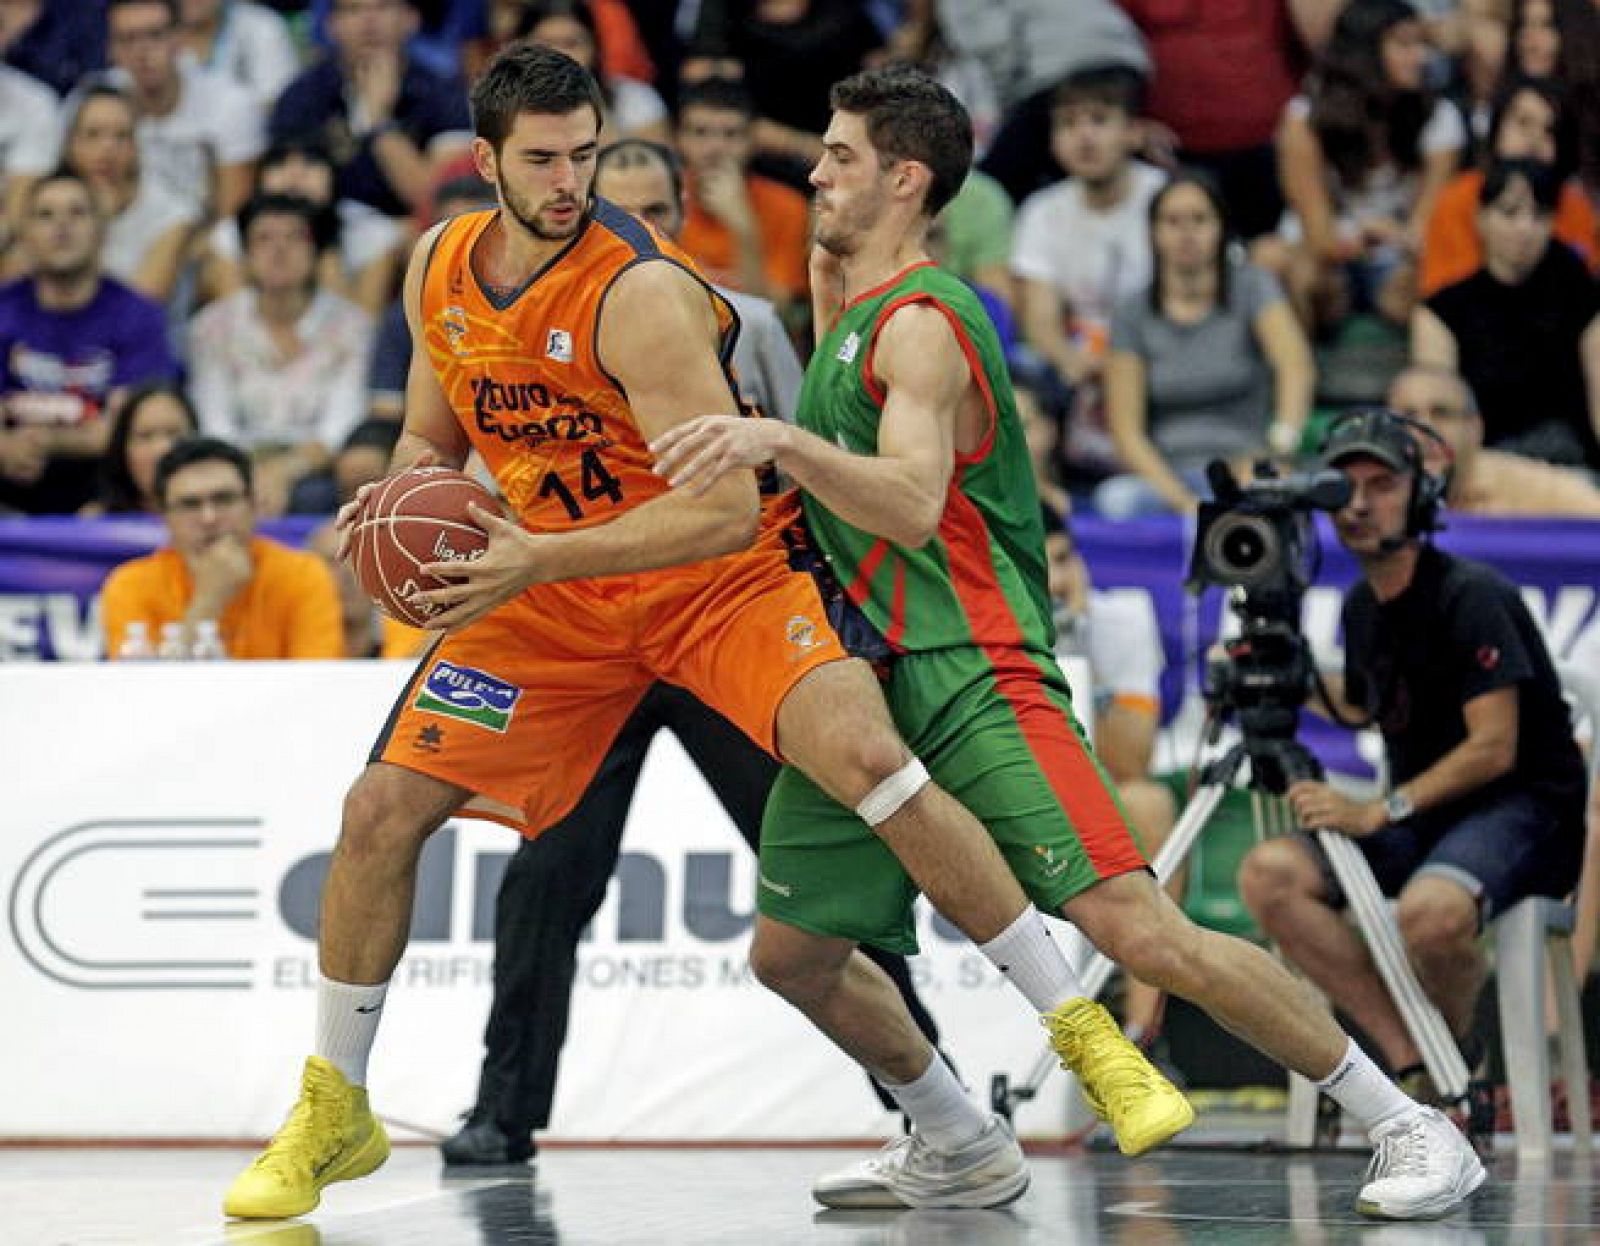 El ala-pívot montenegrino del Valencia Basket Bojan Dubljevic (i) disputa la posición al alero del Cajasol Sevilla Joan Sastre (d)